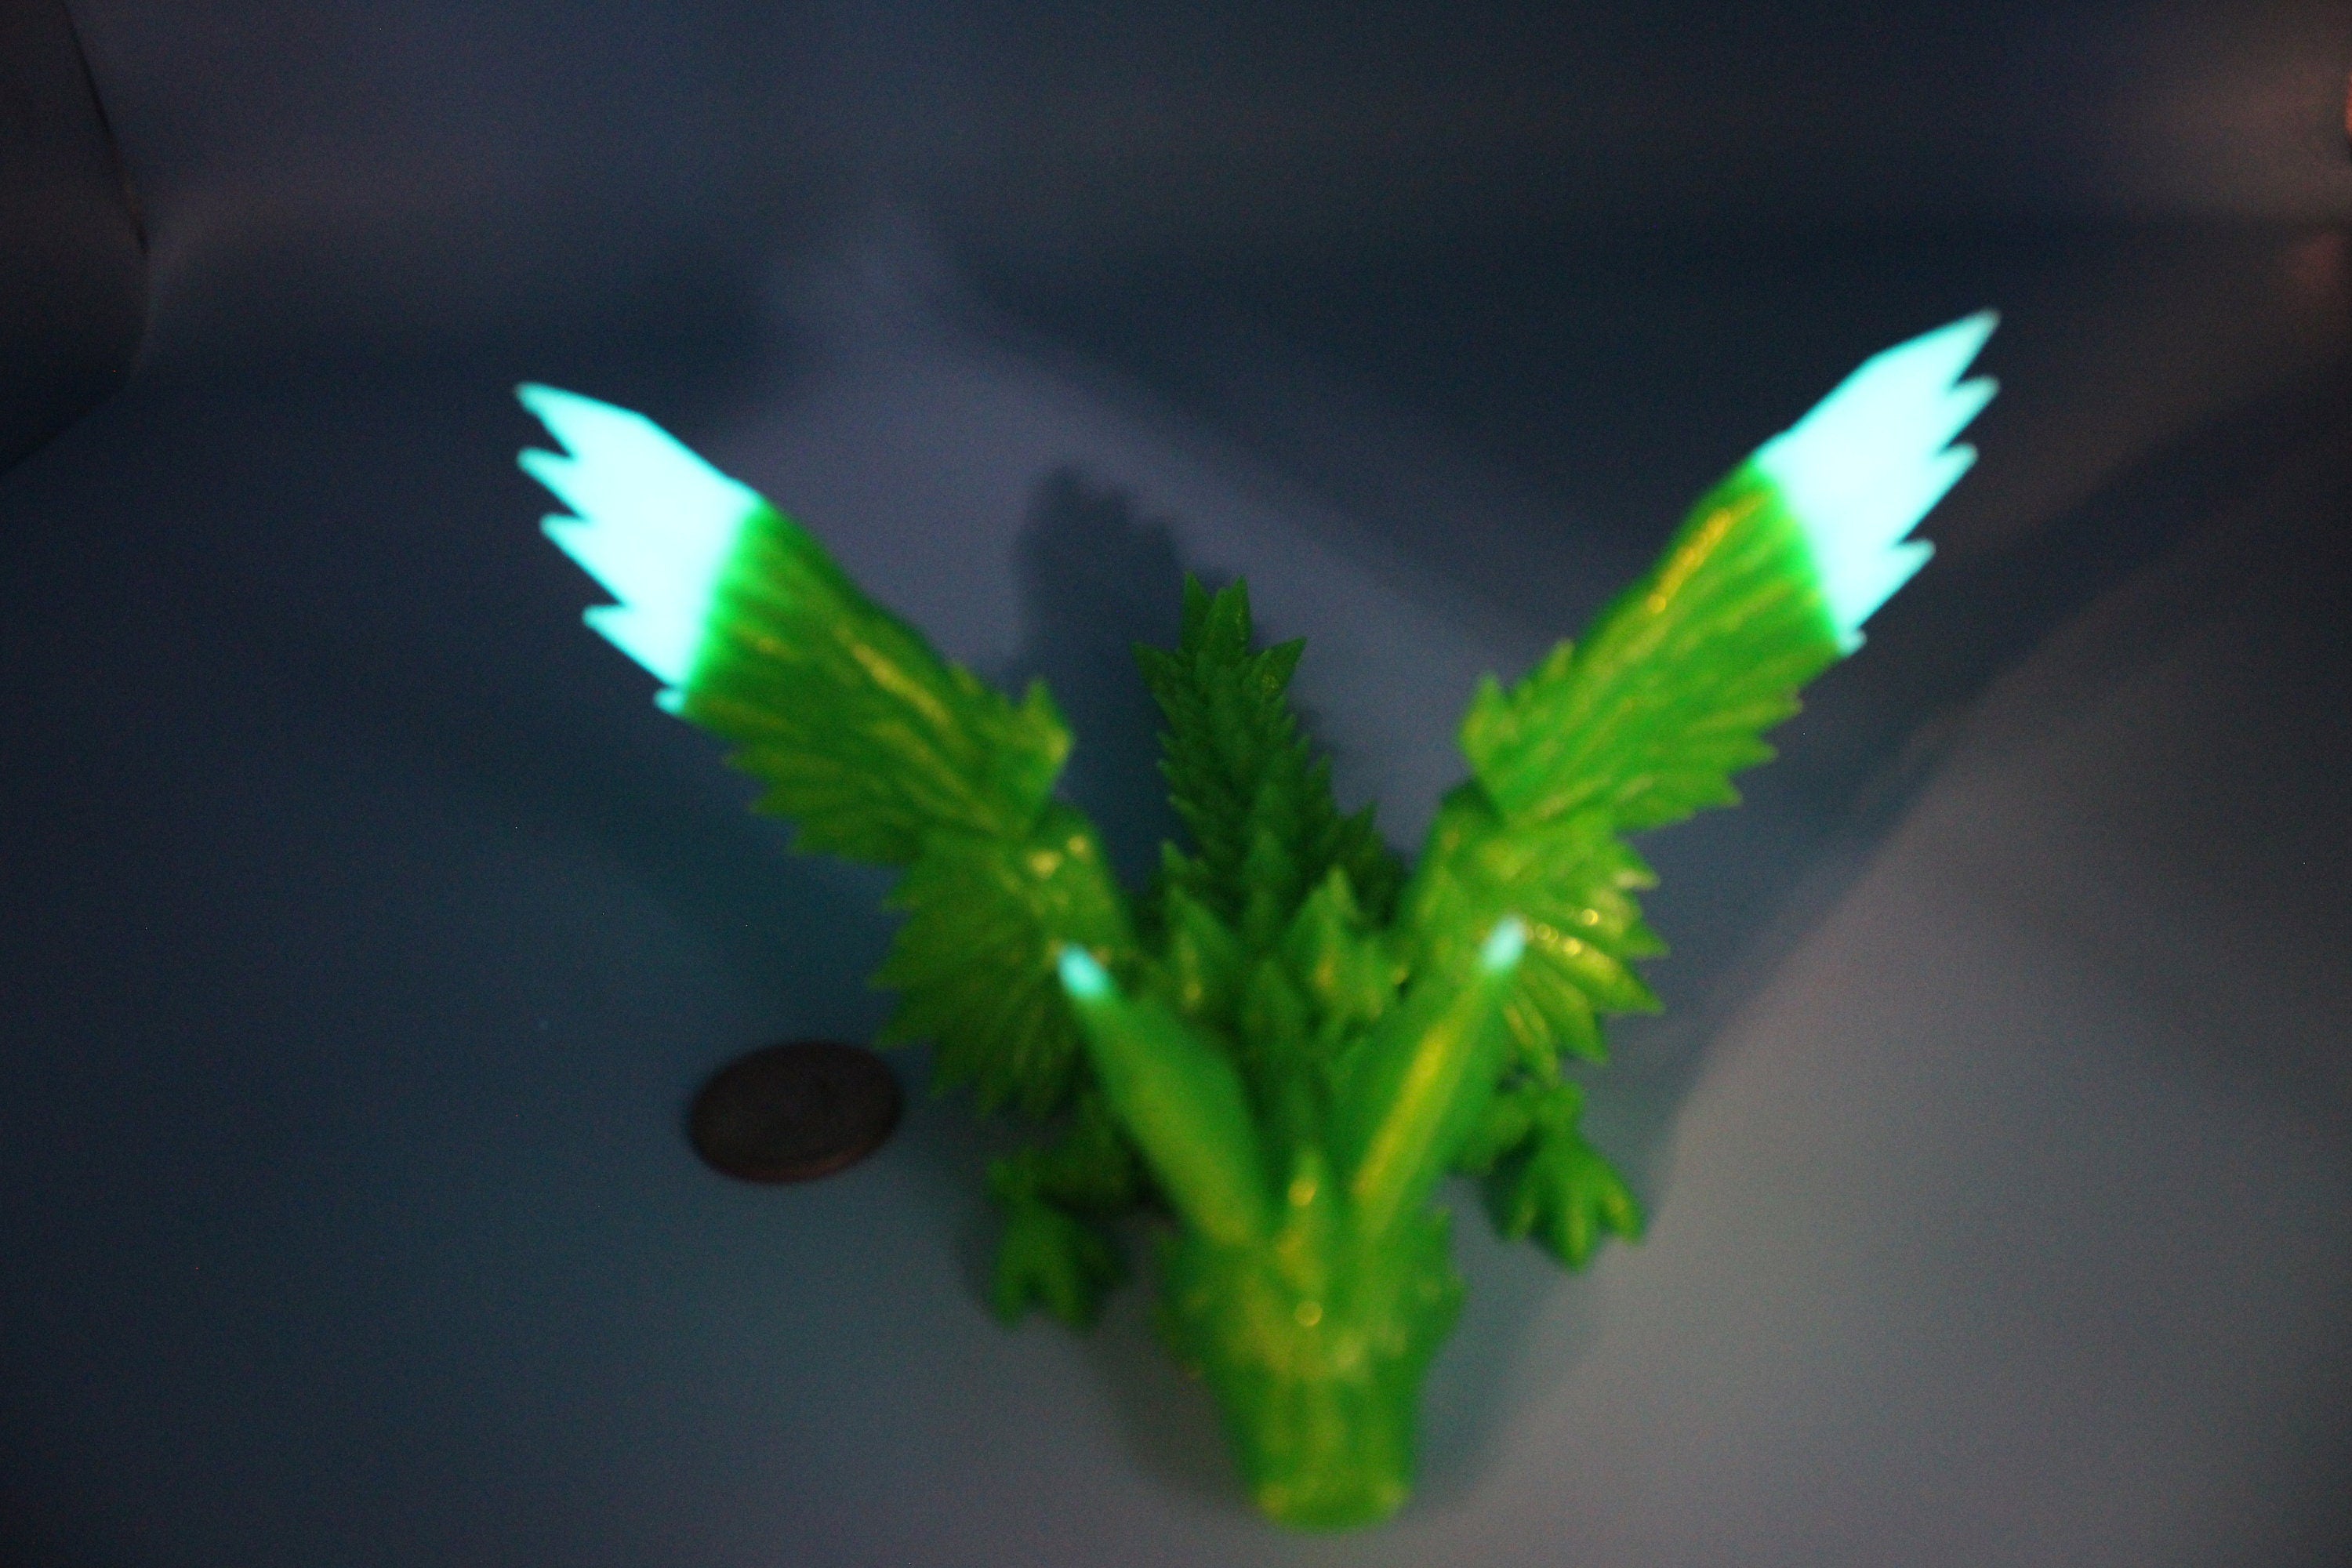 Baby Crystal Wing Dragon | Miniature | 3D printed | Dragon Fidget | Flexi Toy | 7 in. | Pet Dragon.